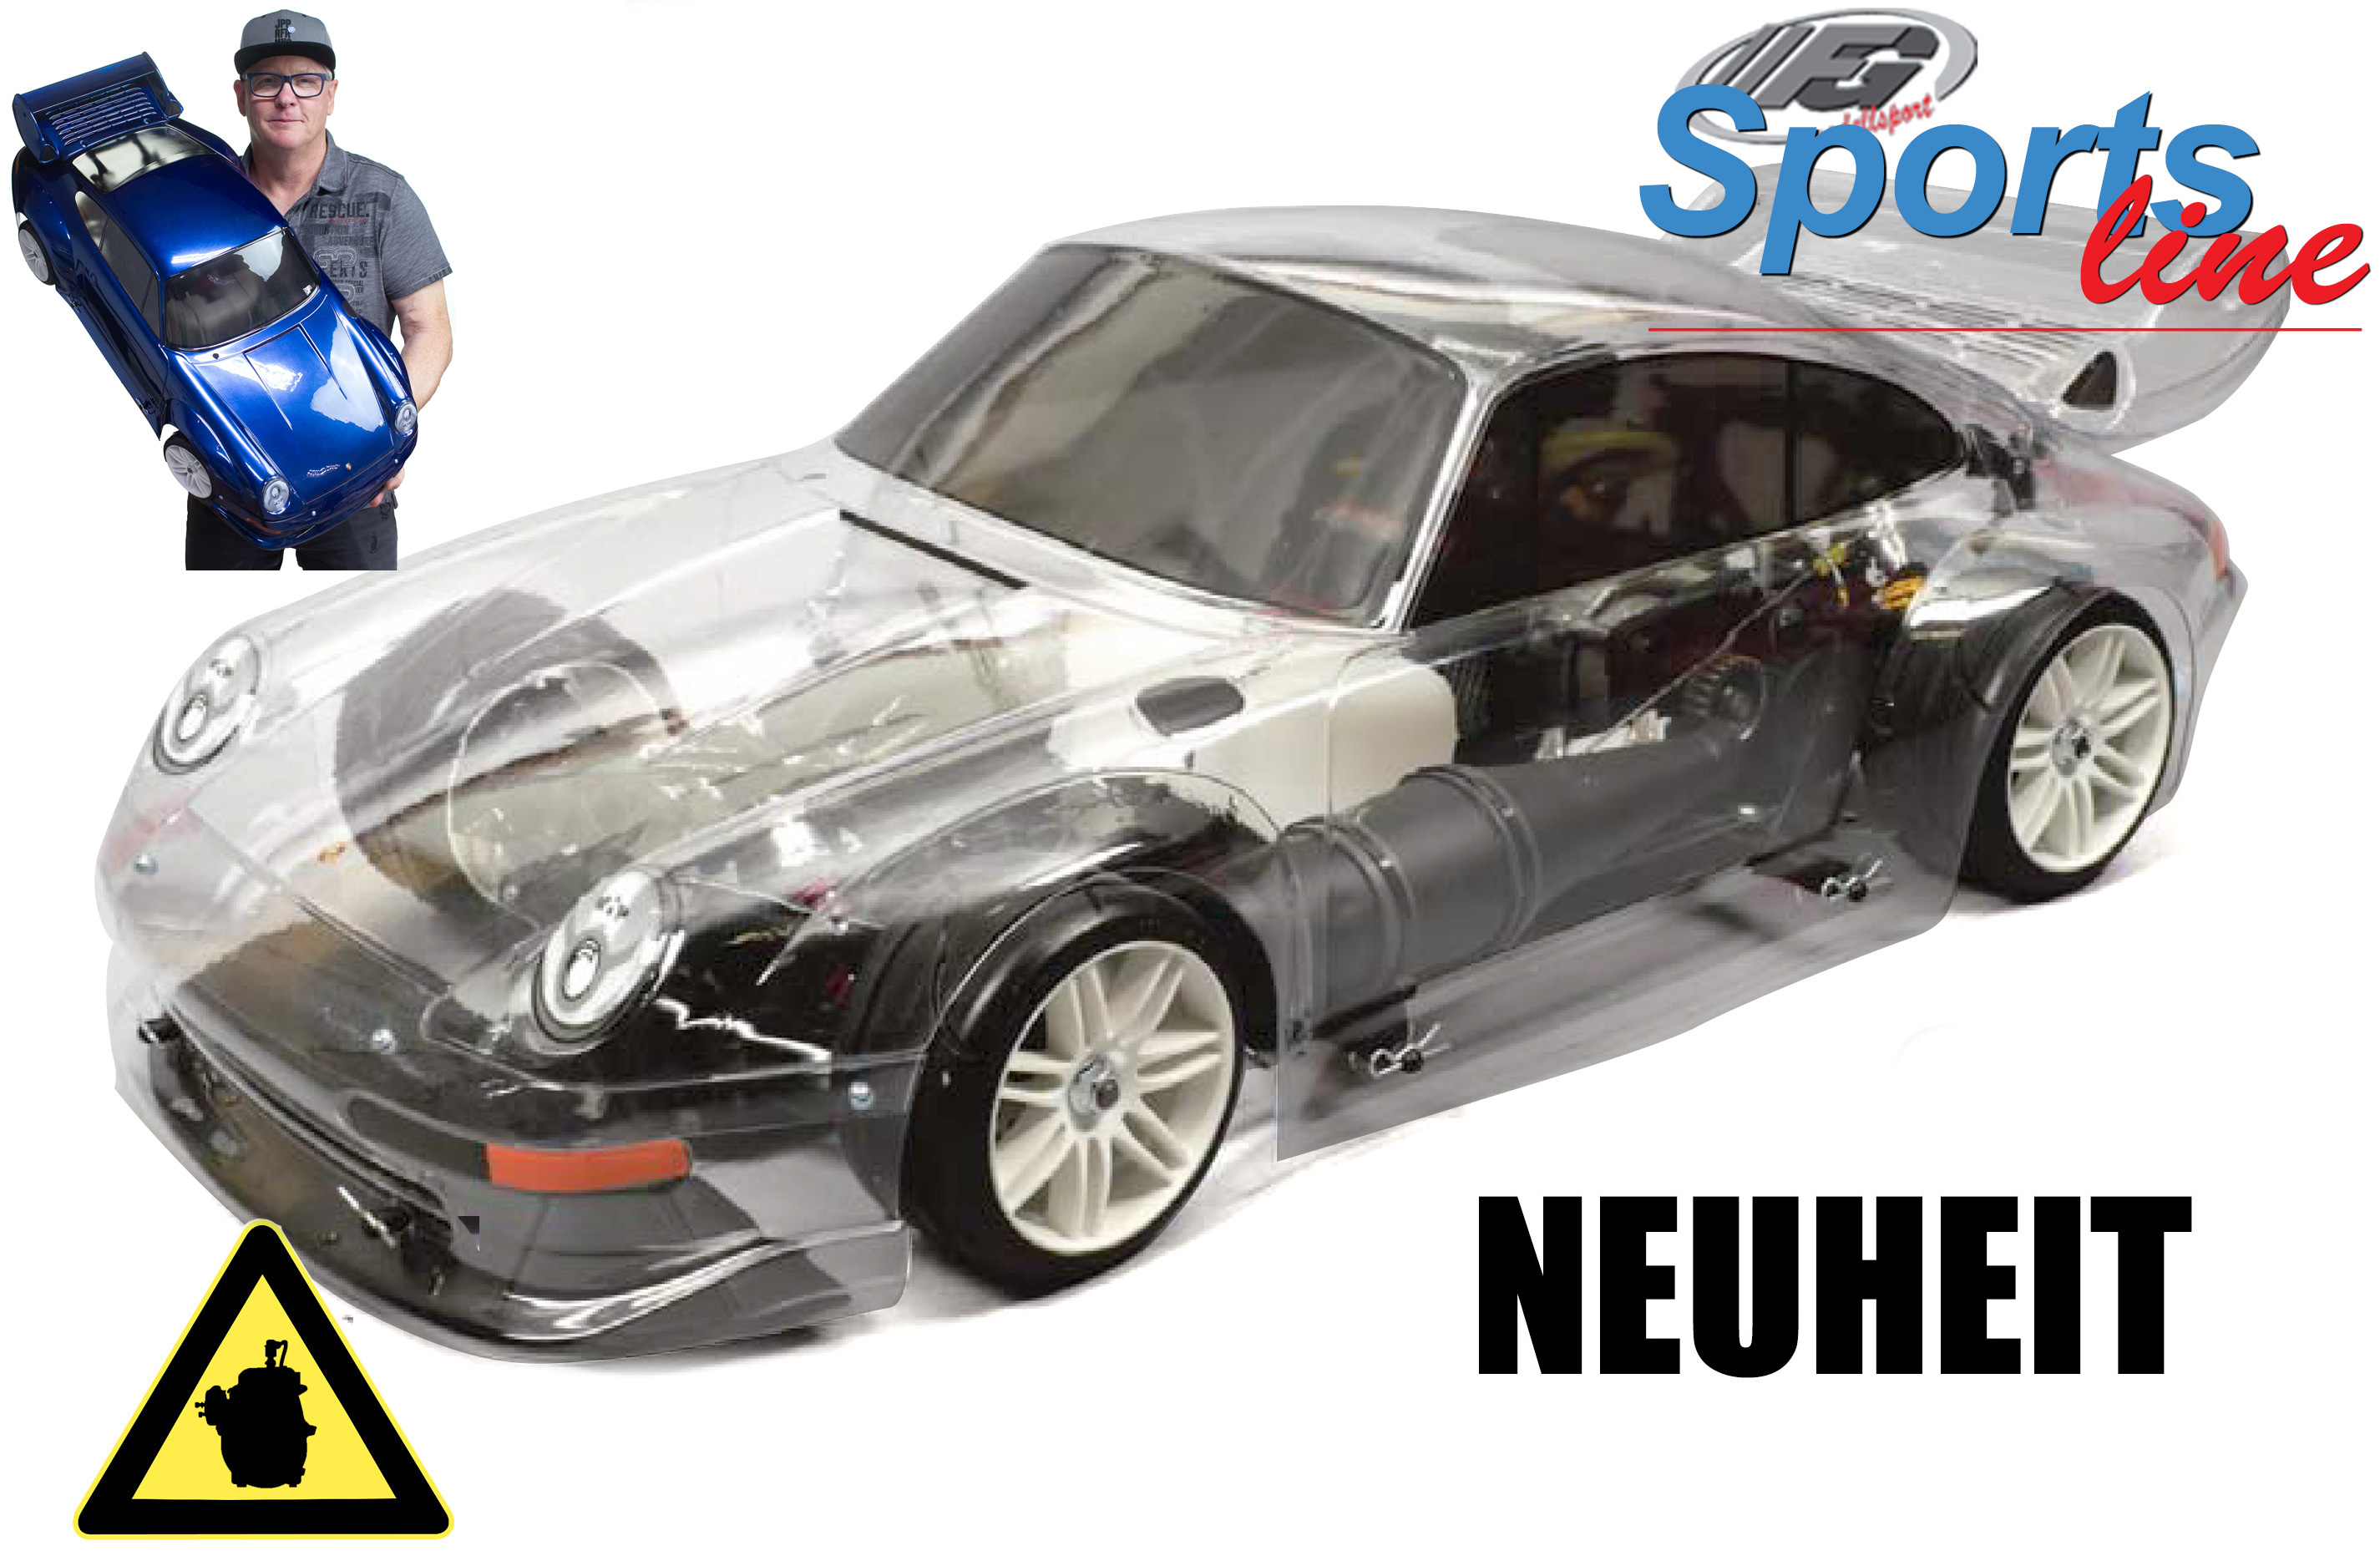 FG Sportsline 2WD-465 with Porsche GT2 body shell, 23cm³ Engine